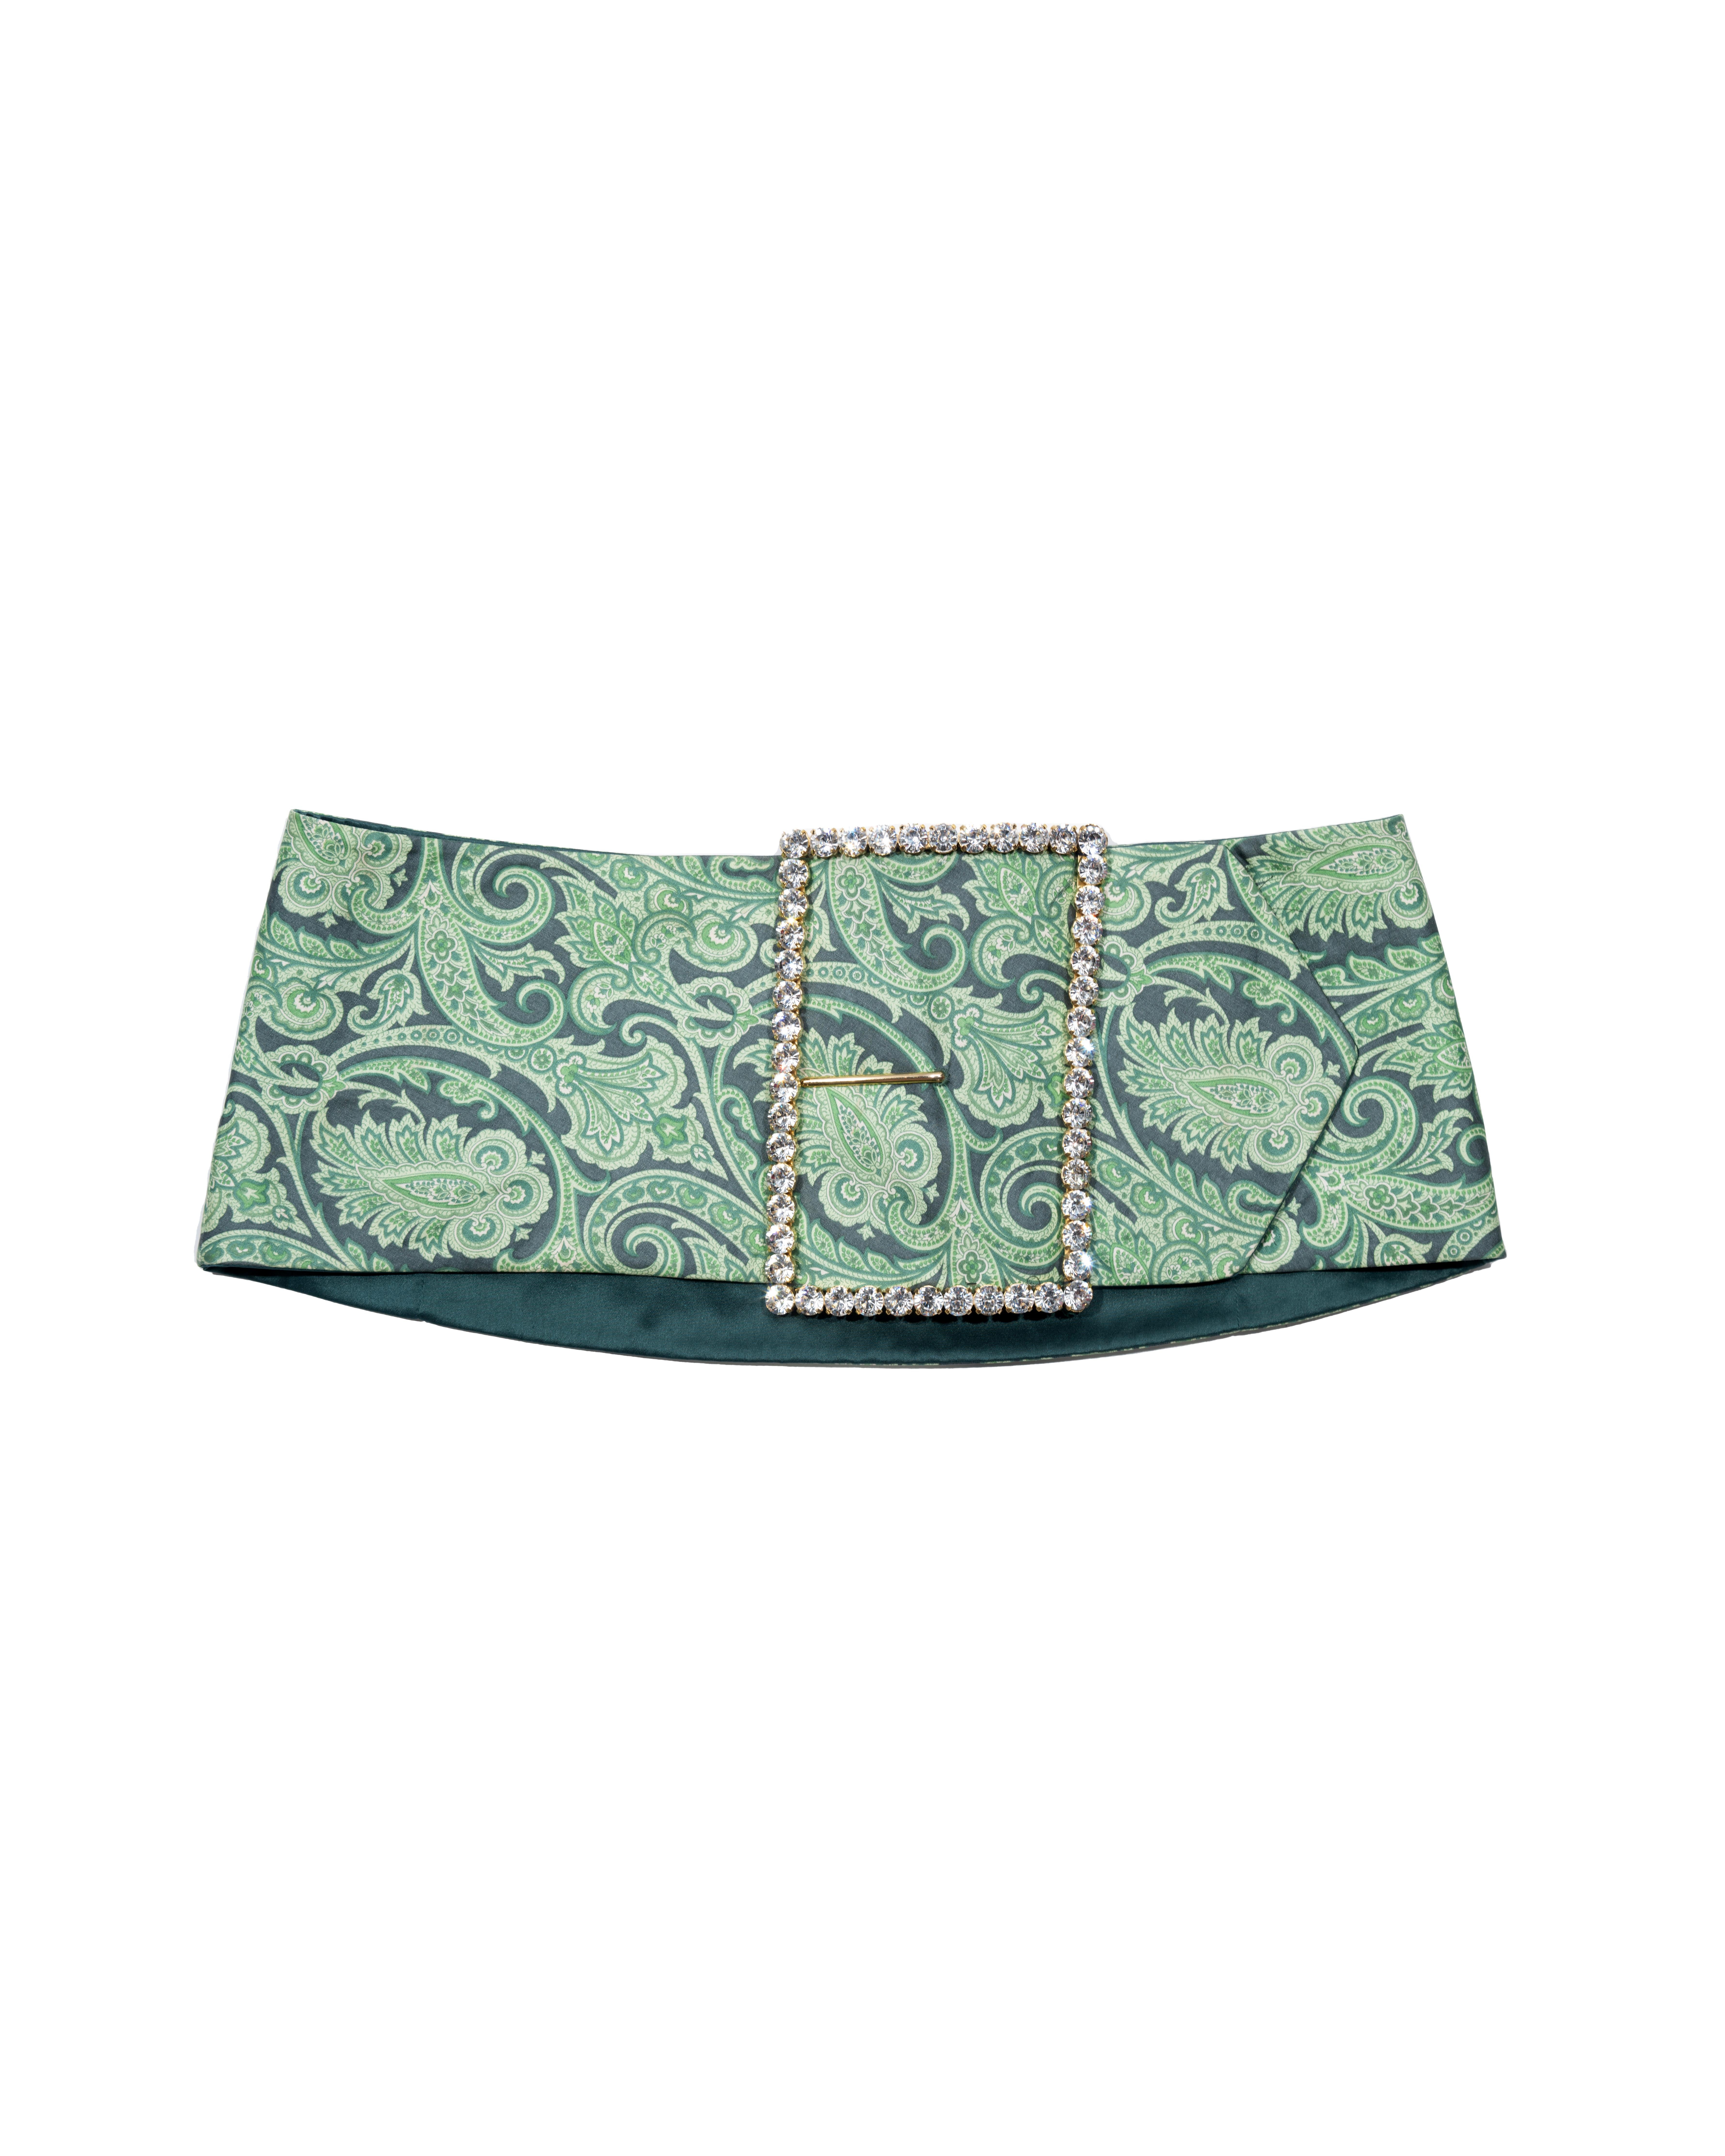 Women's Dolce & Gabbana Green Silk Micro Mini Skirt with Swarovski Crystals, ss 2000